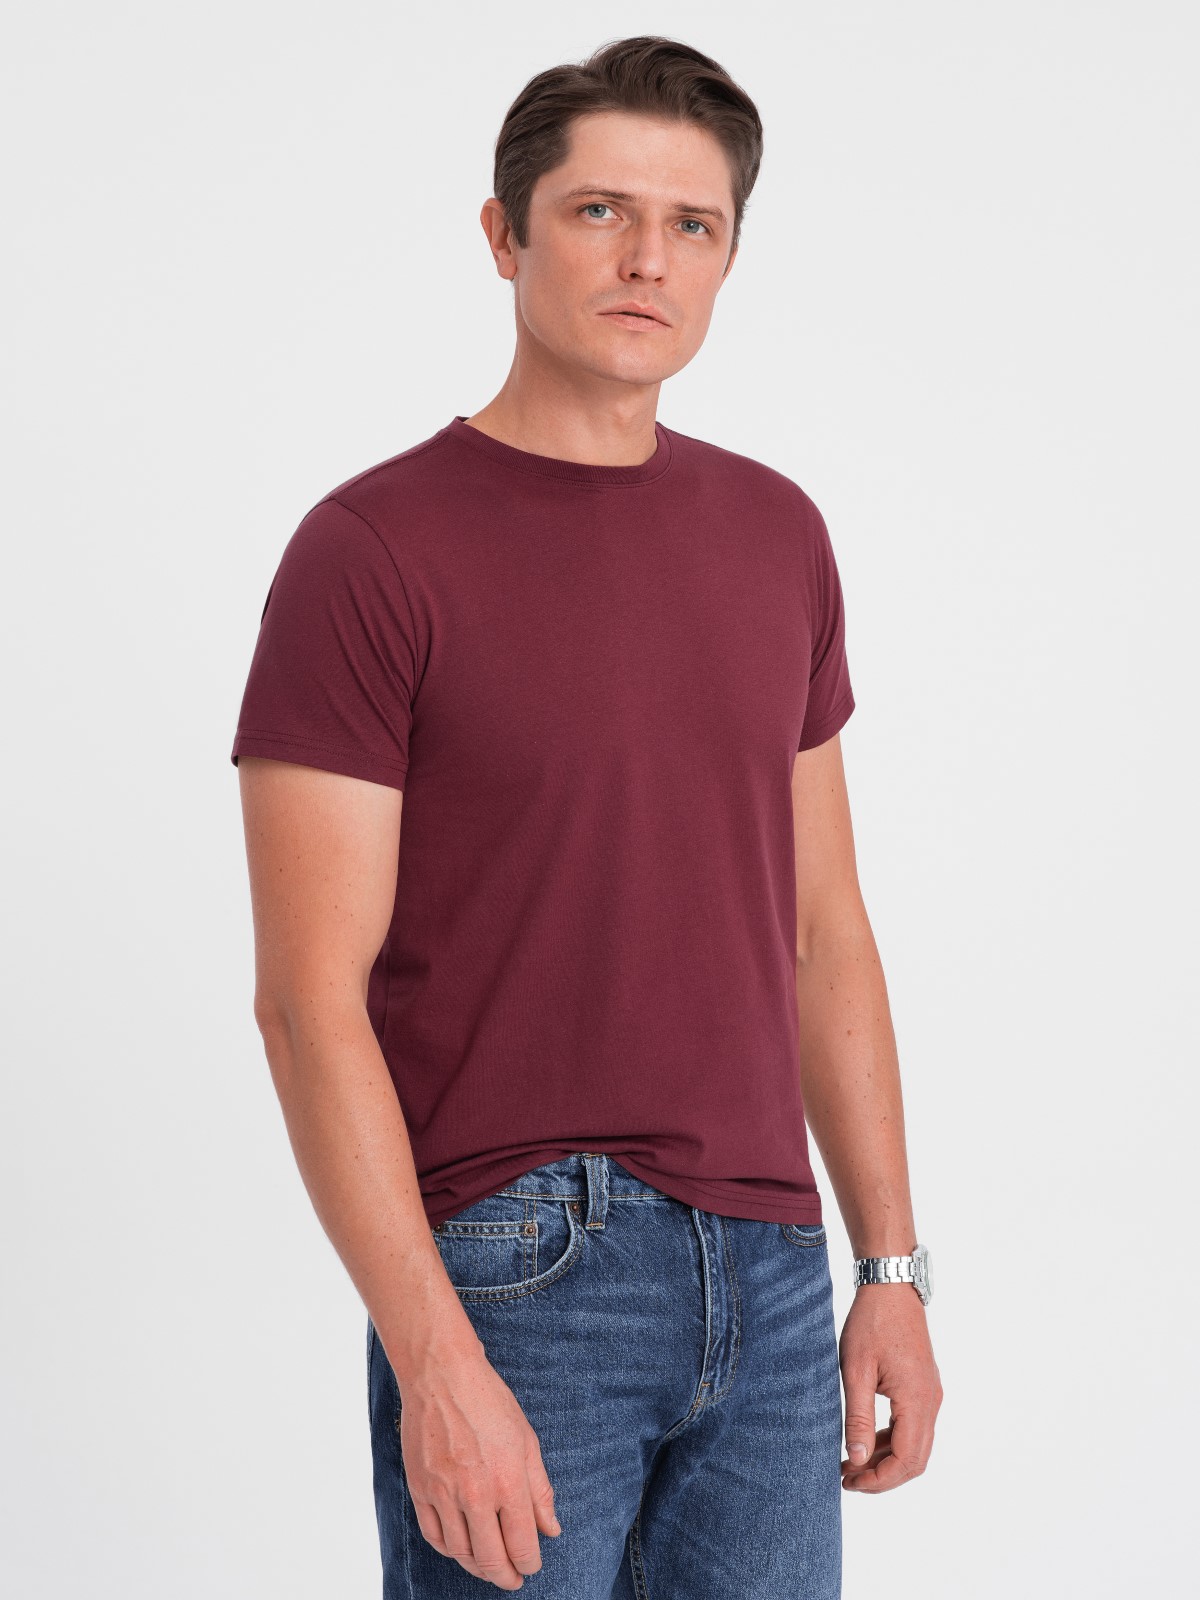 Ombre Men's classic cotton BASIC T-shirt - maroon